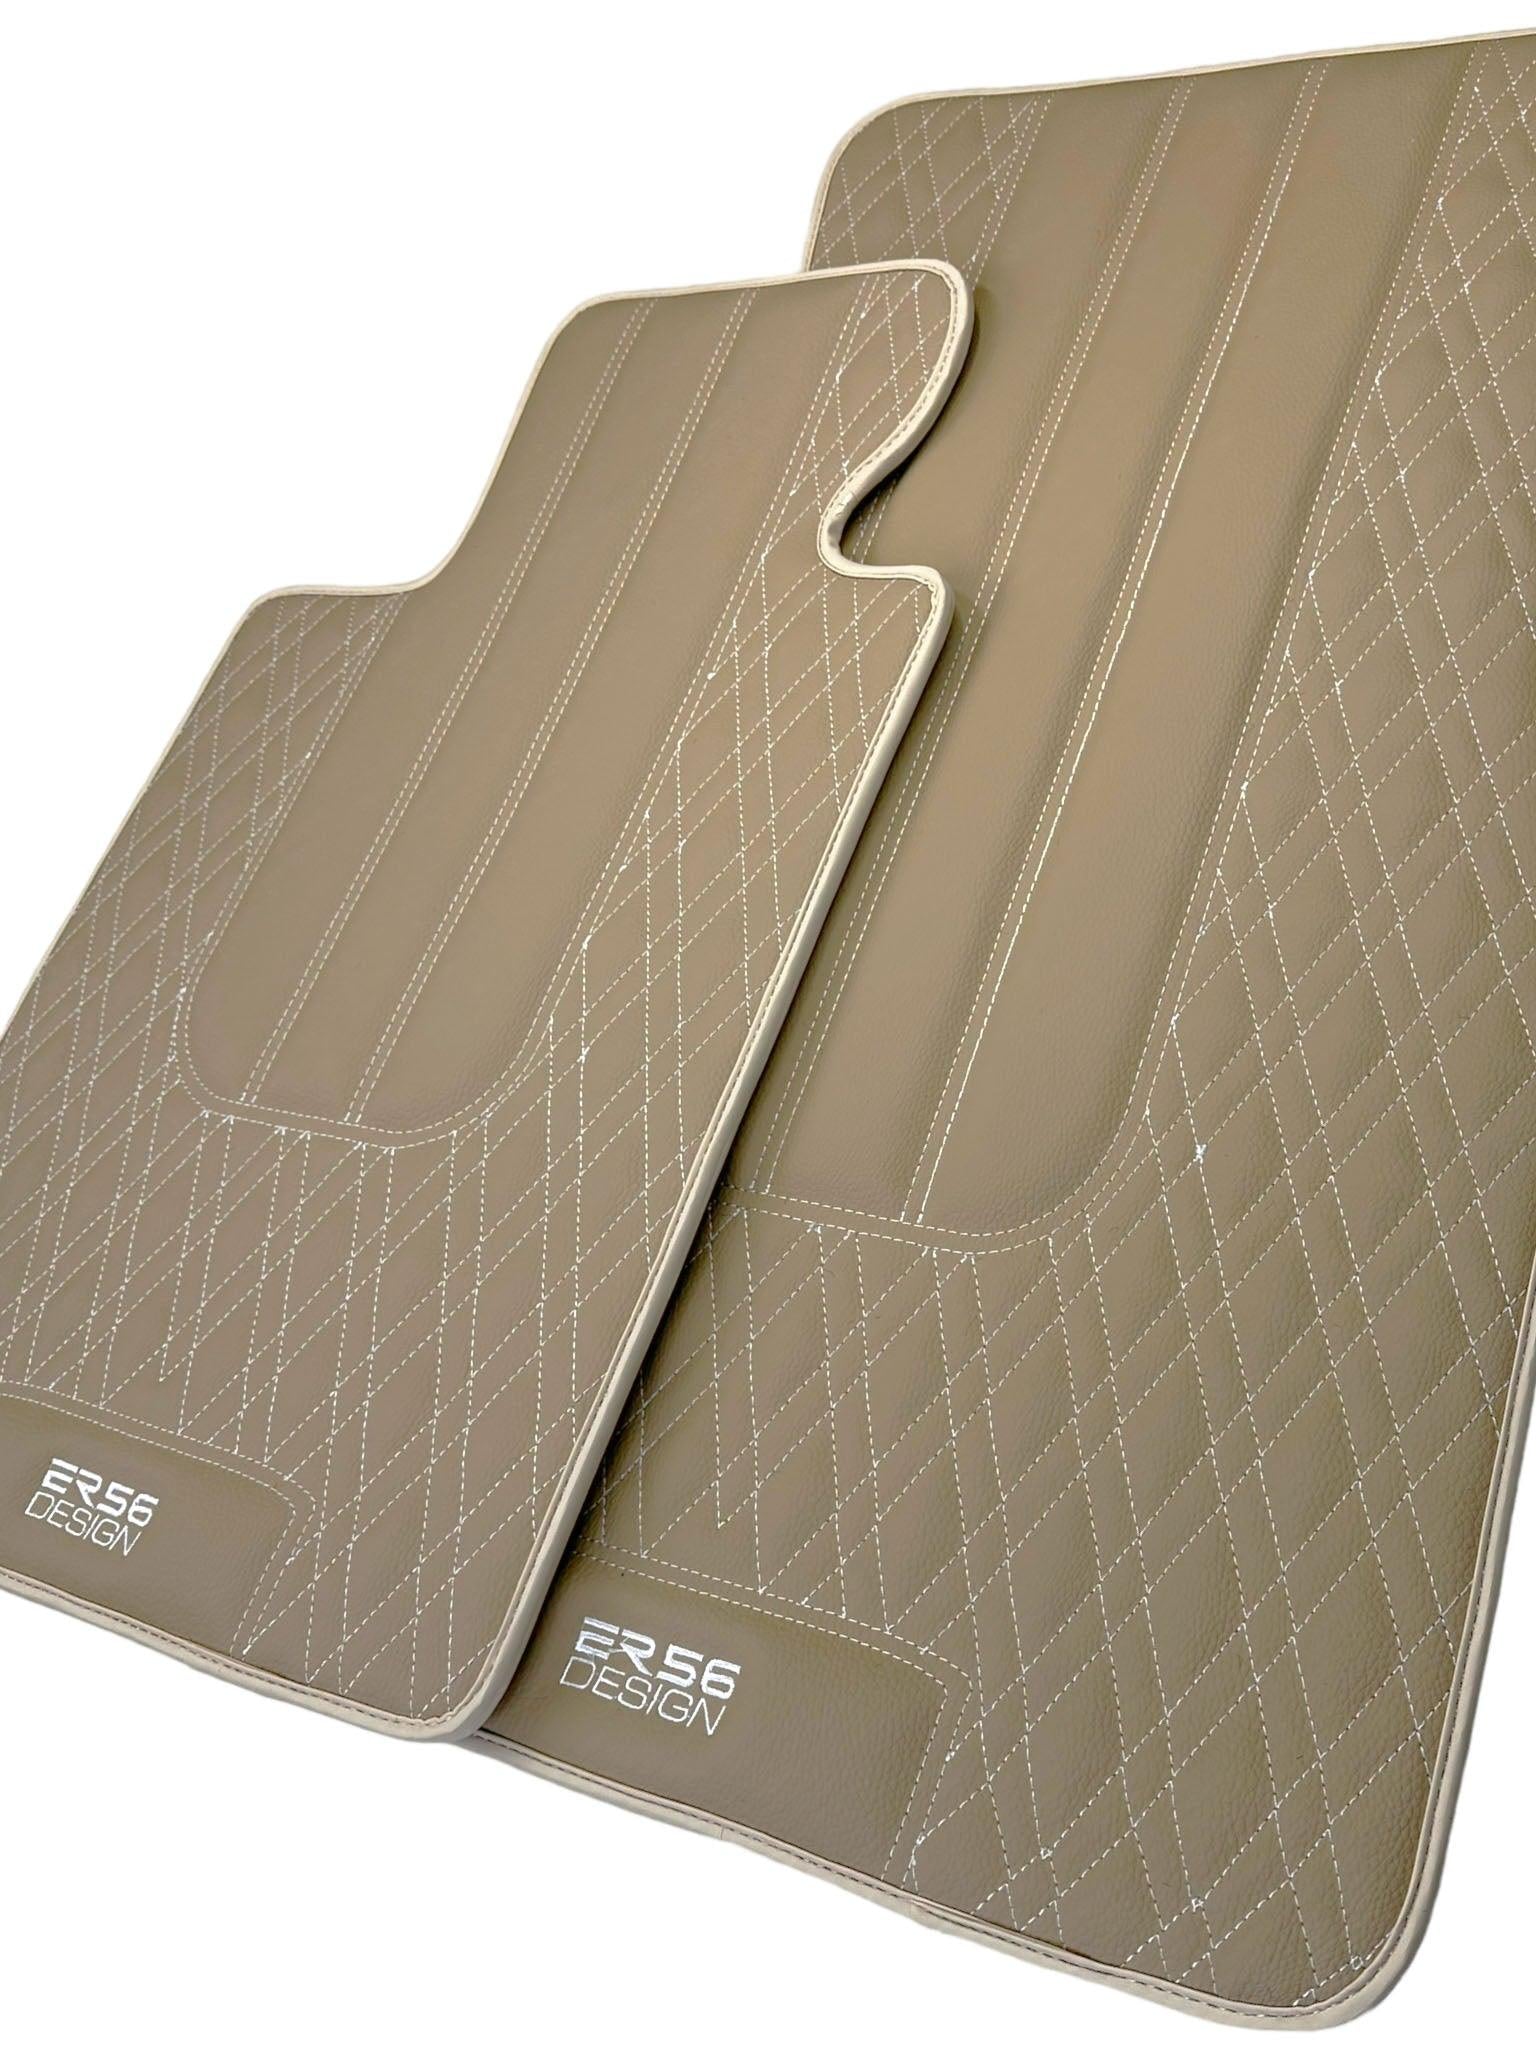 Beige Leather Floor Floor Mats For BMW 7 Series E65 | Fighter Jet Edition AutoWin Brand |Sky Blue Trim